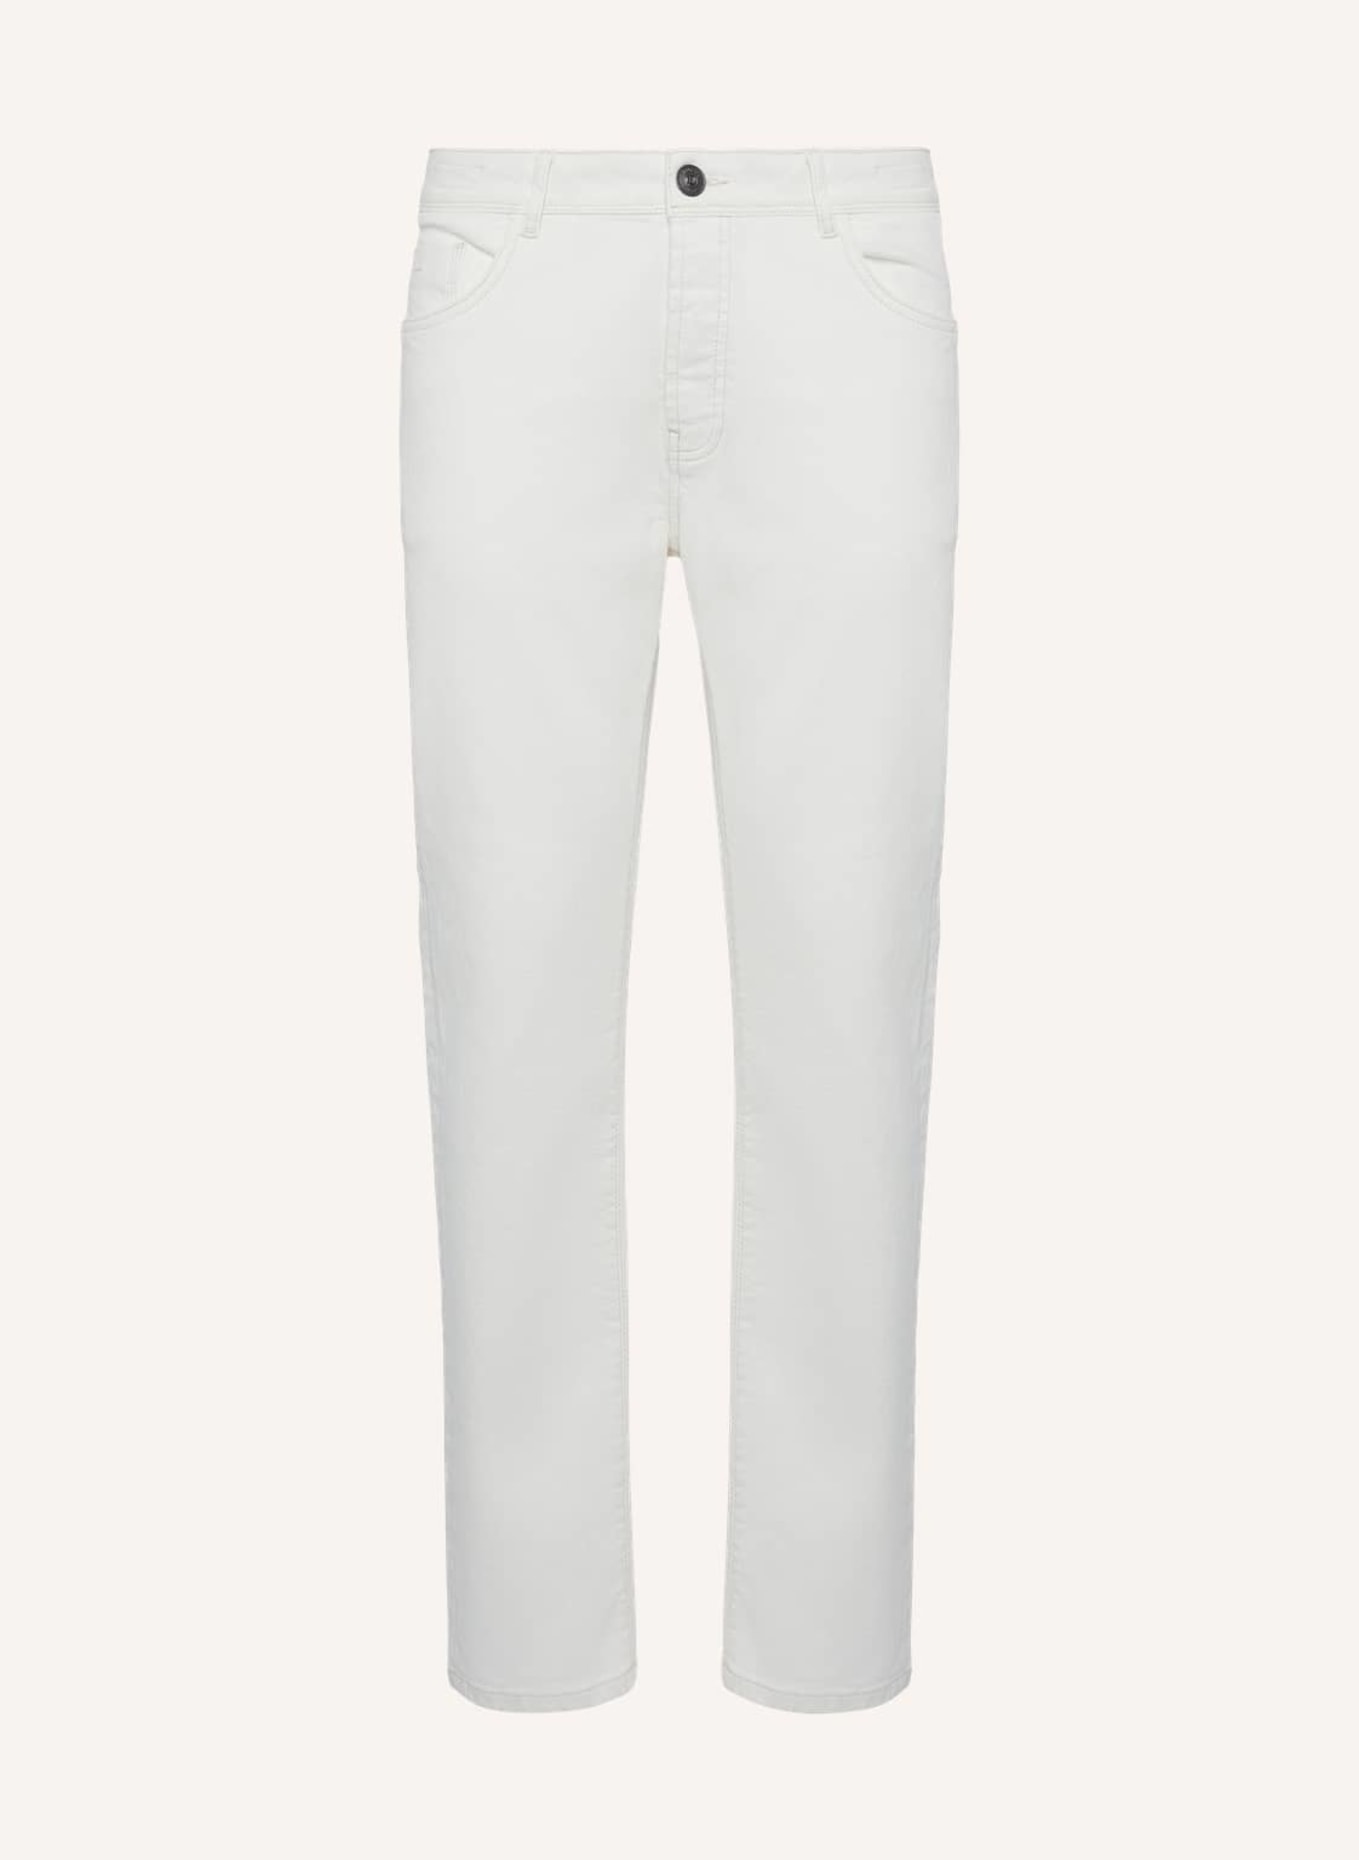 BOGGI MILANO Jeans Regular Fit, Farbe: CREME (Bild 1)